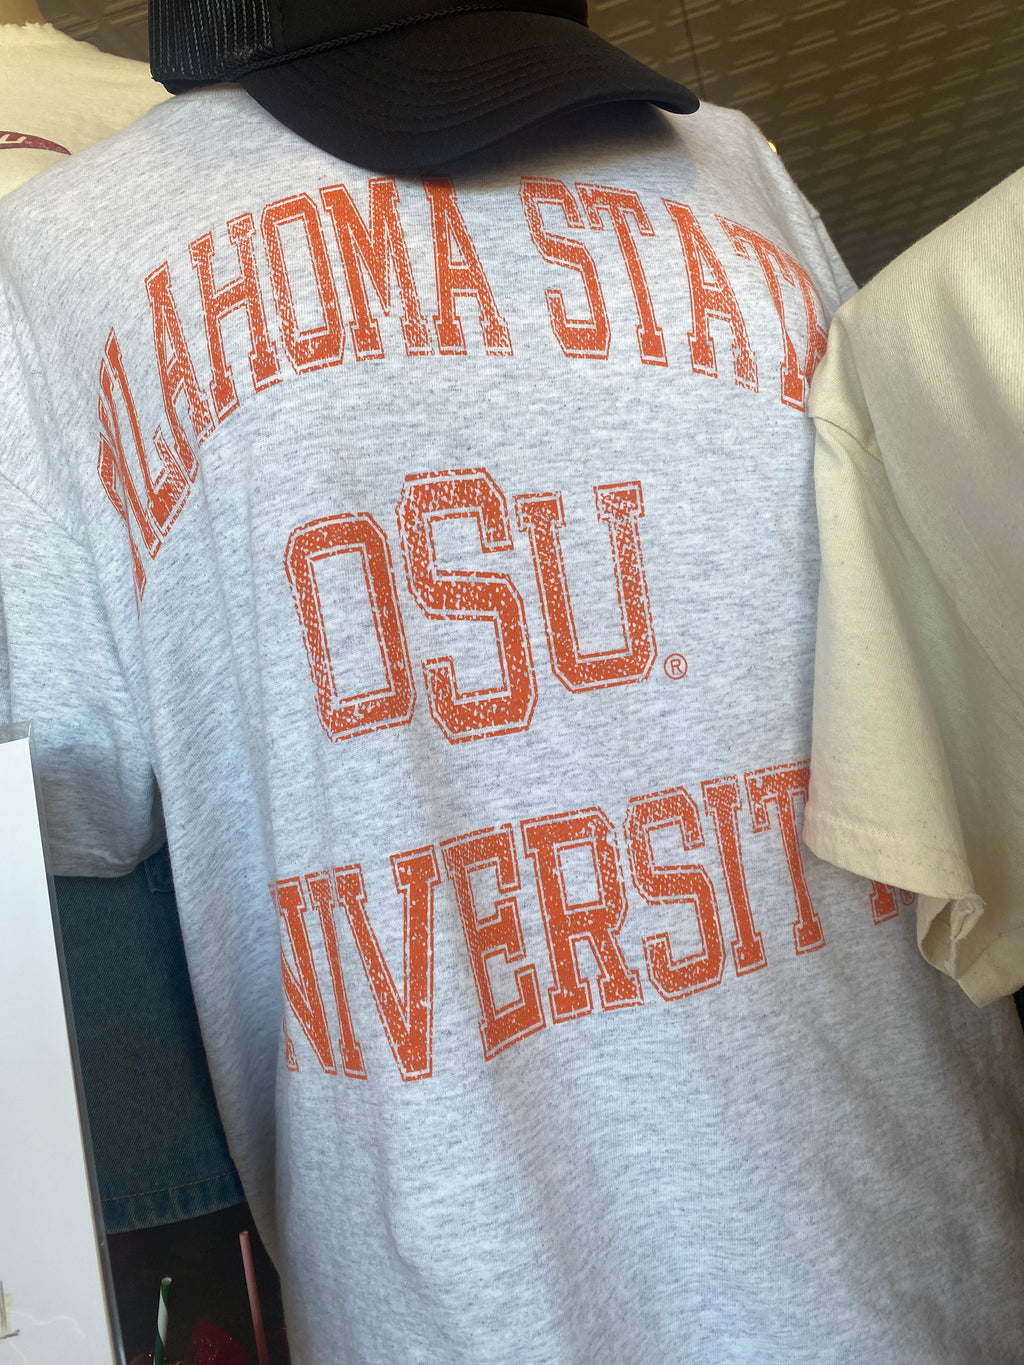 The OSU University Thrifted Tee